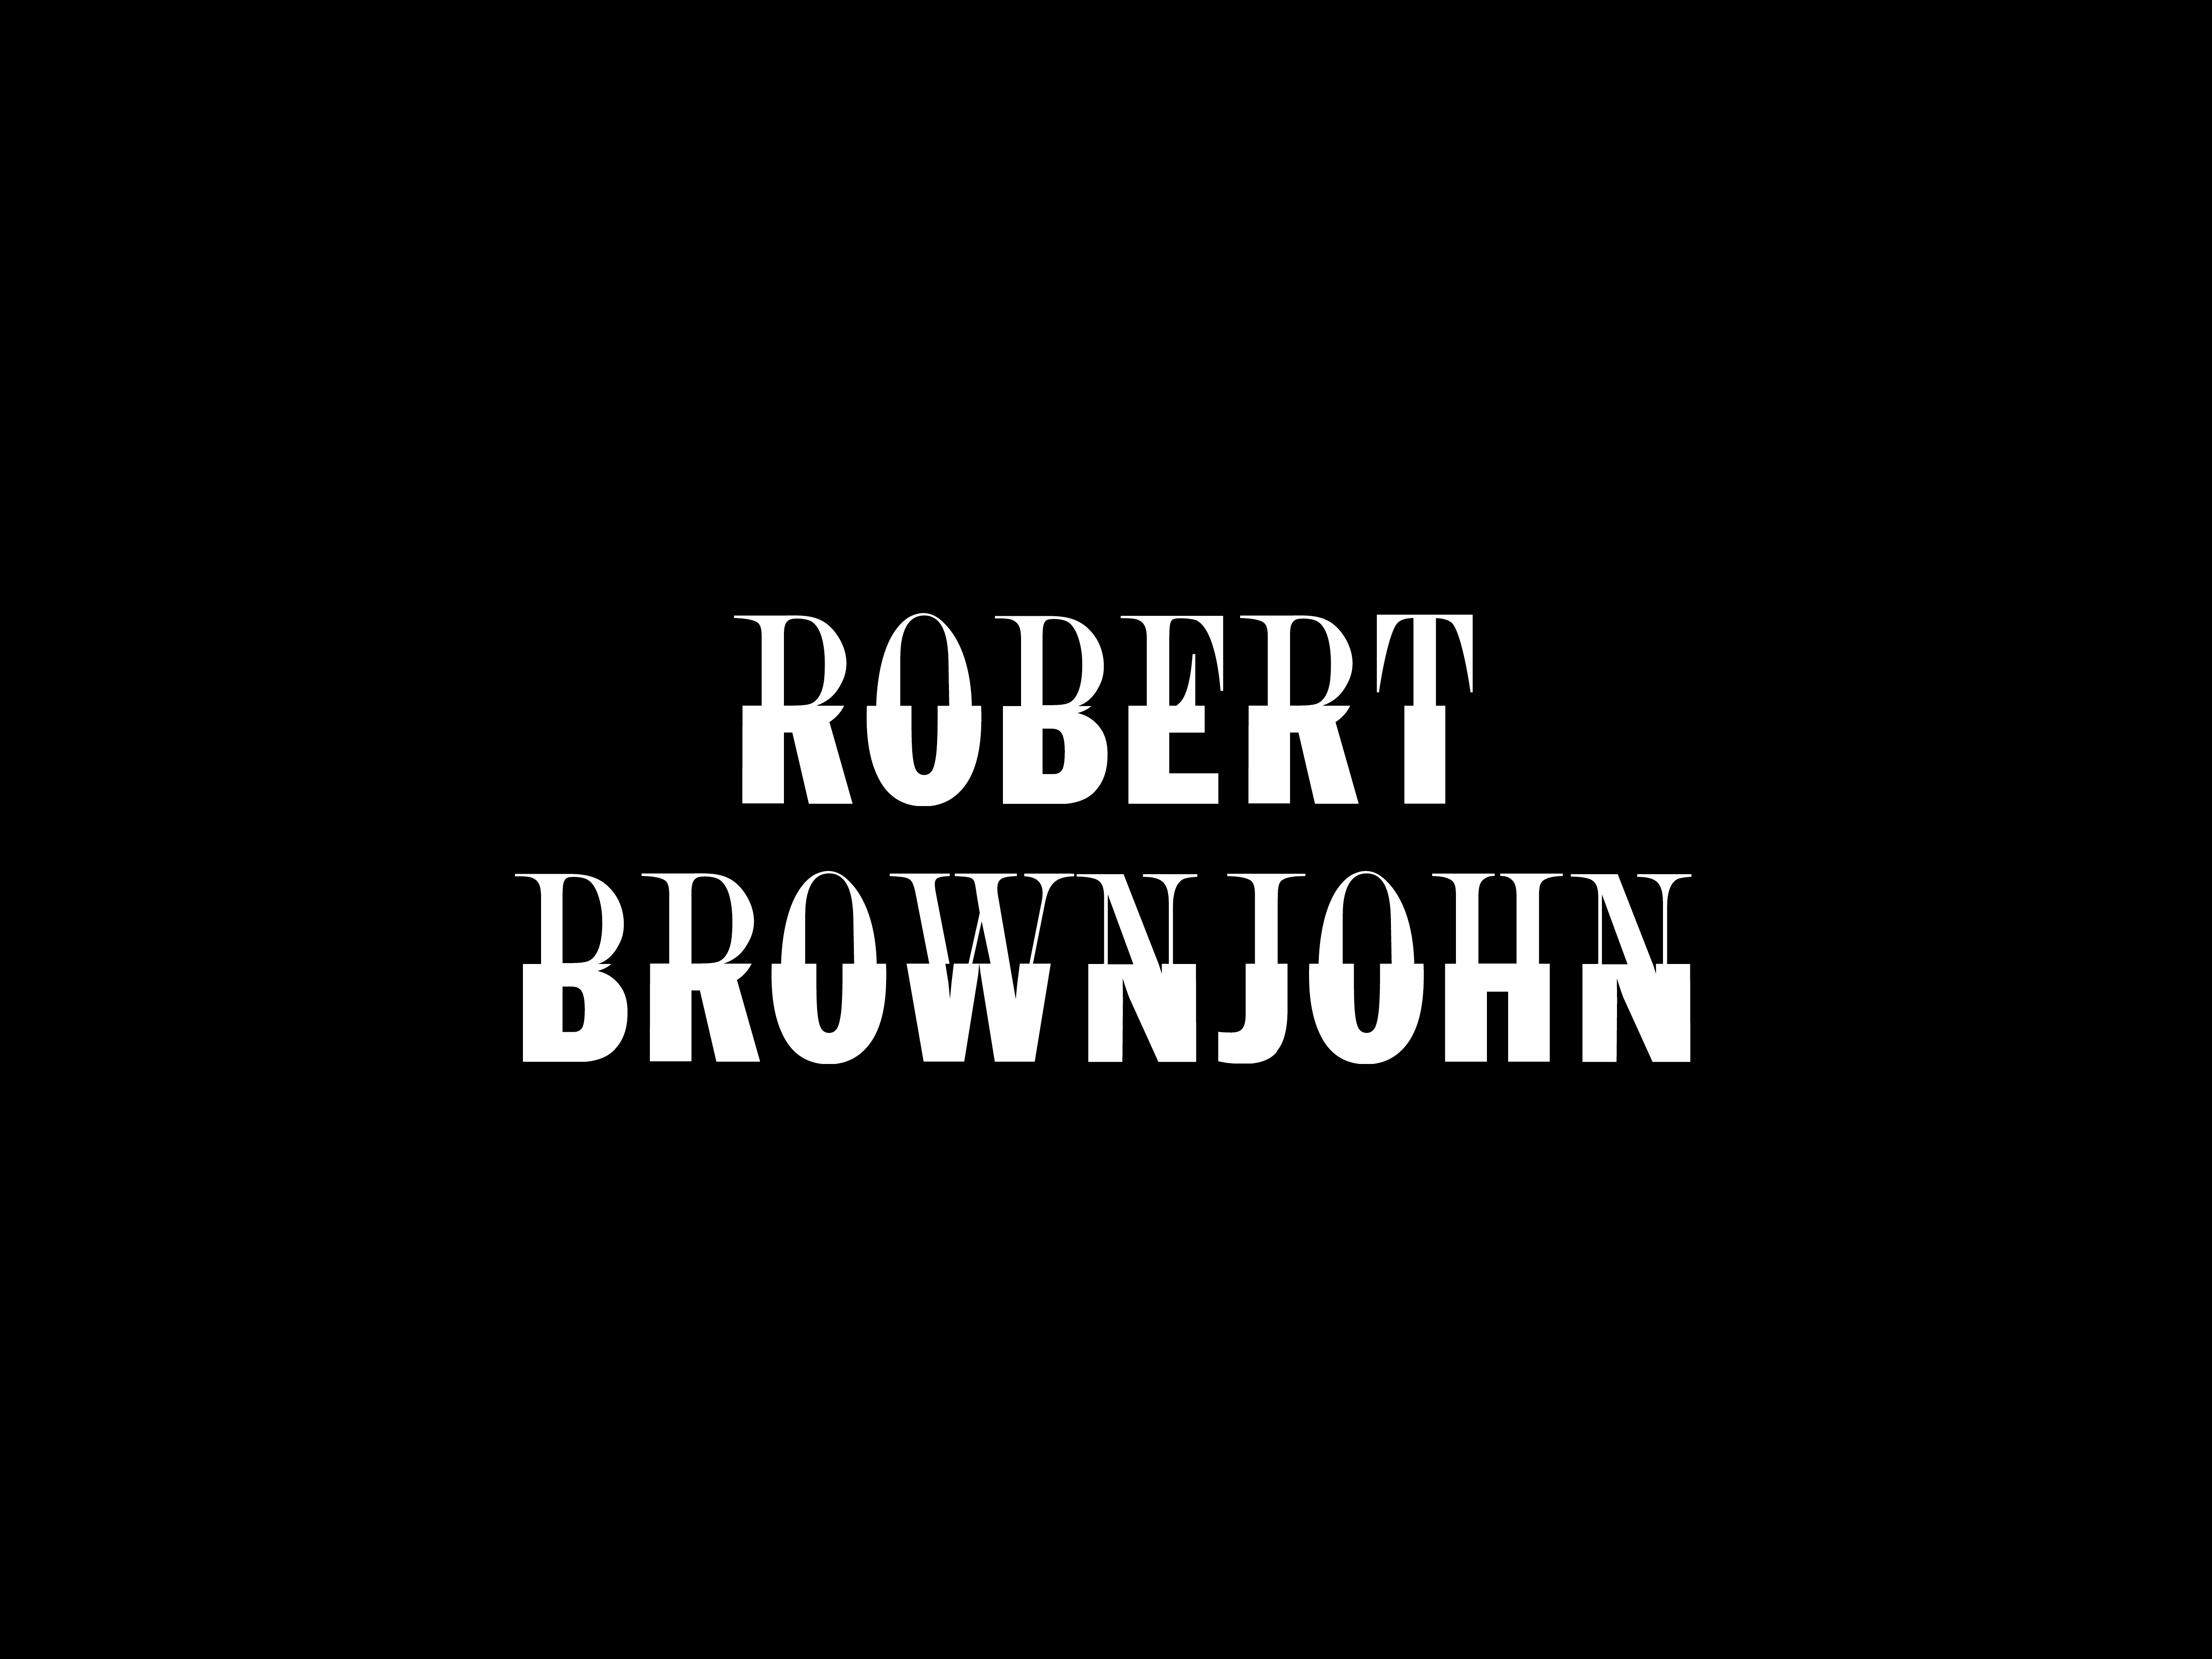 Robert Brownjohn